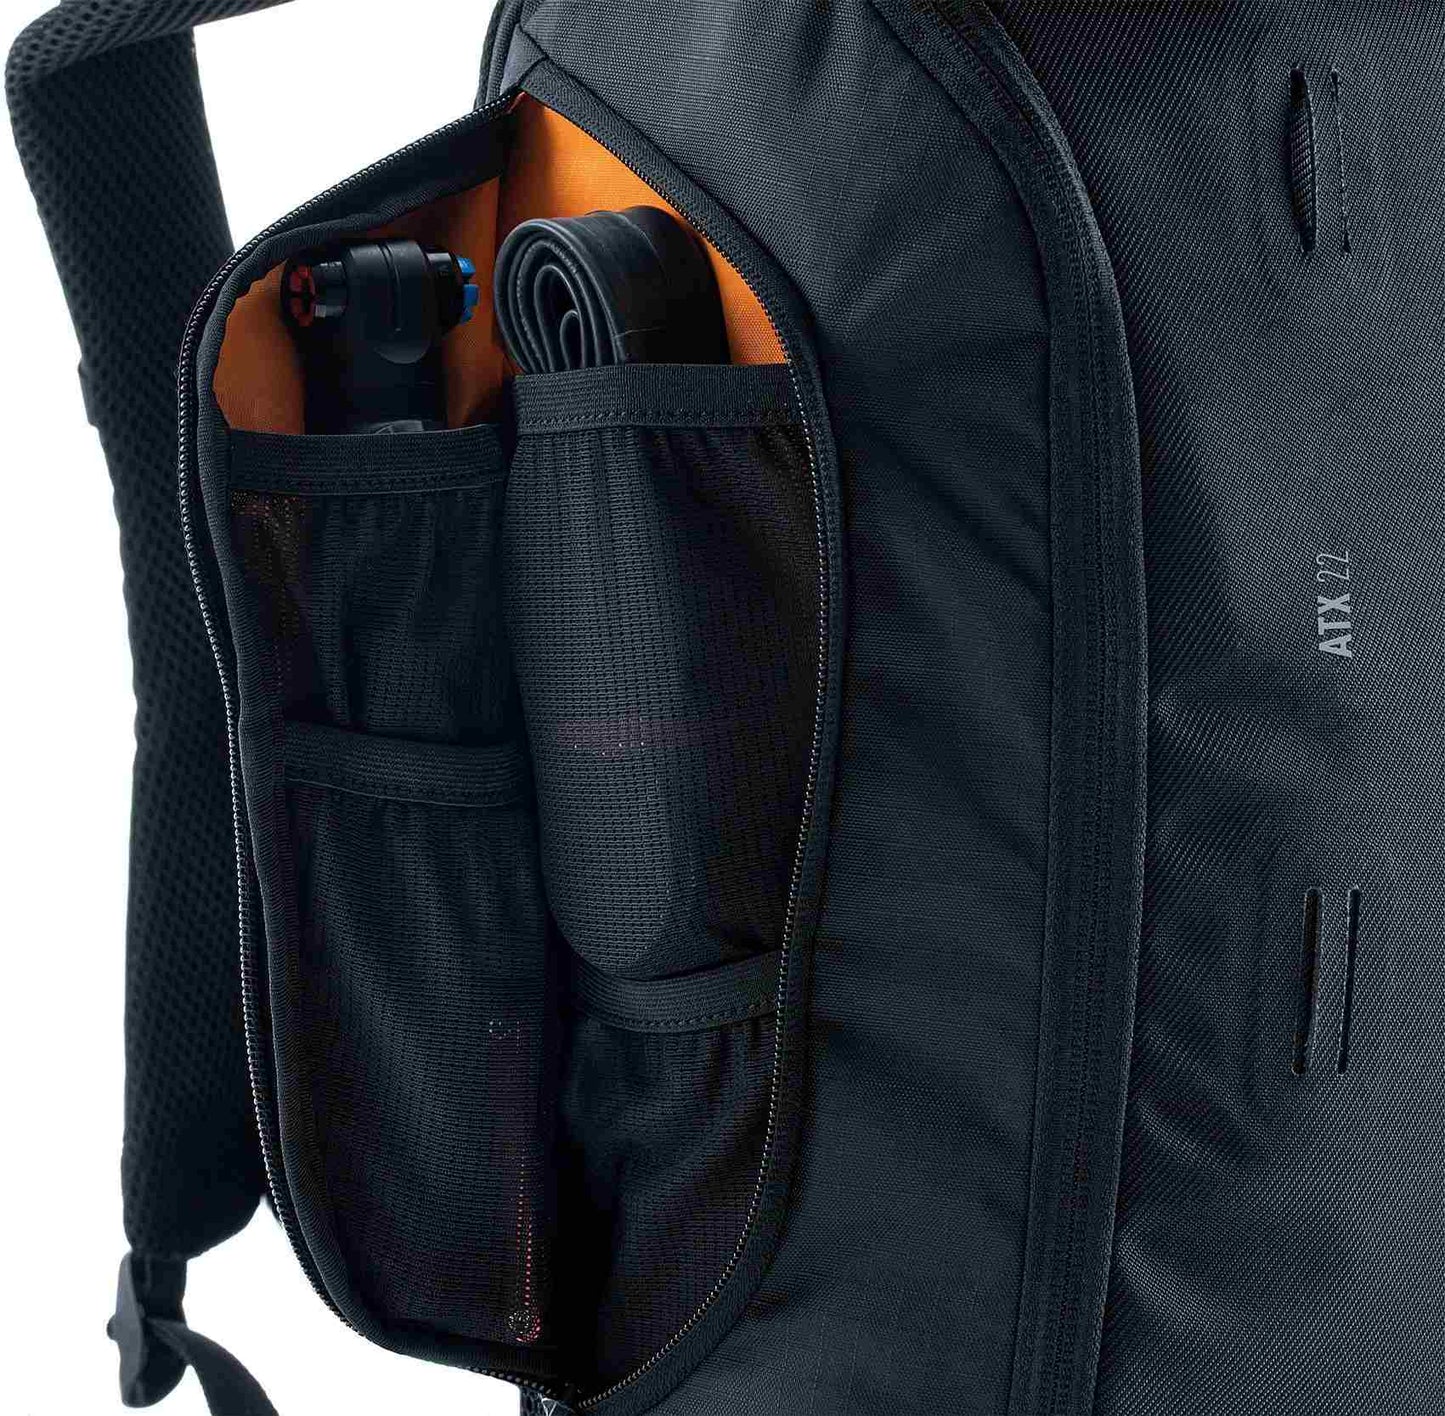 CUBE Backpack Atx 22 Black